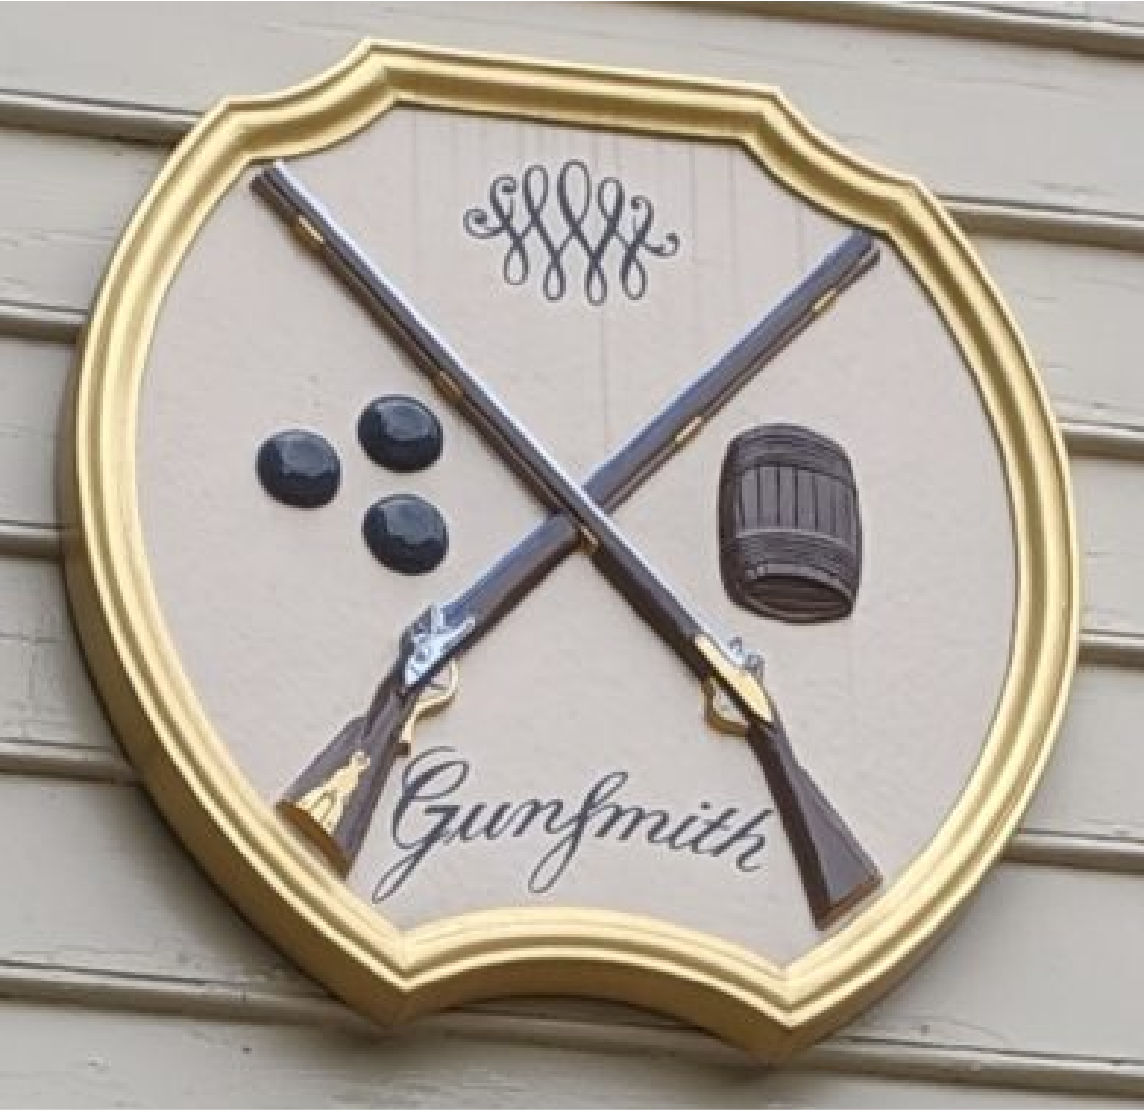 Colonial Williamsburg – Gunsmith Shop